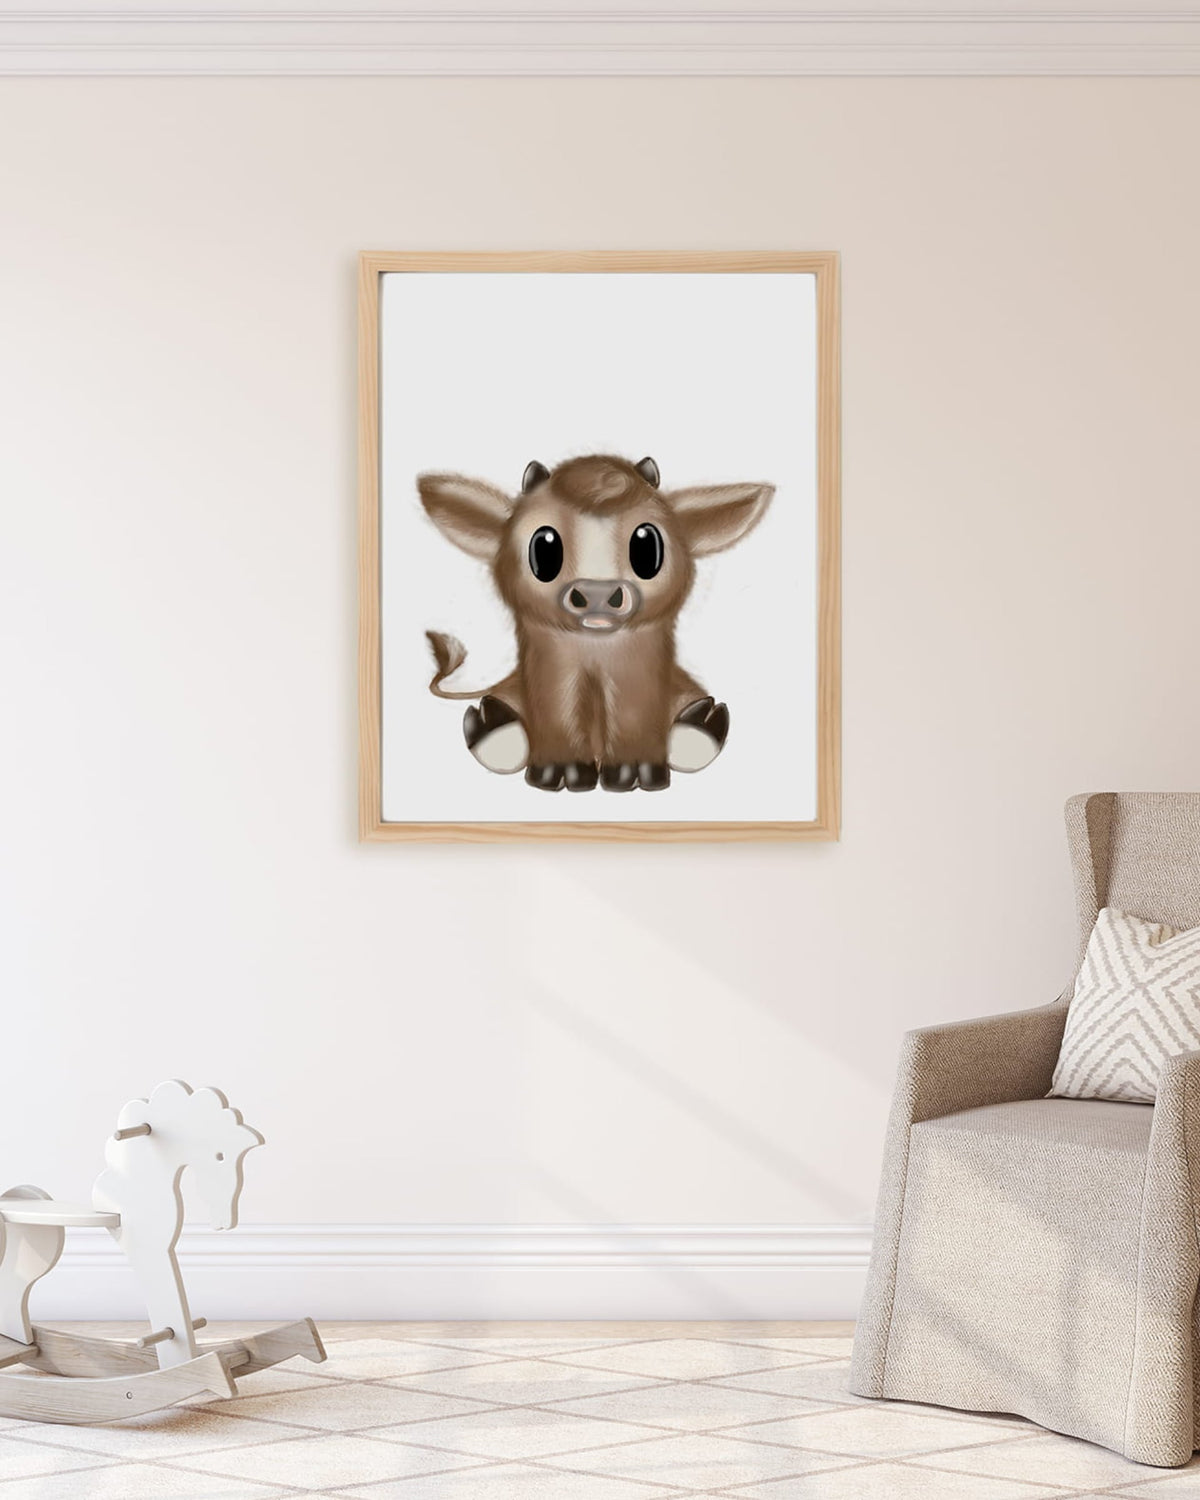 Framed example hand drawn nursery decor wall art poster cute baby bull farm animal